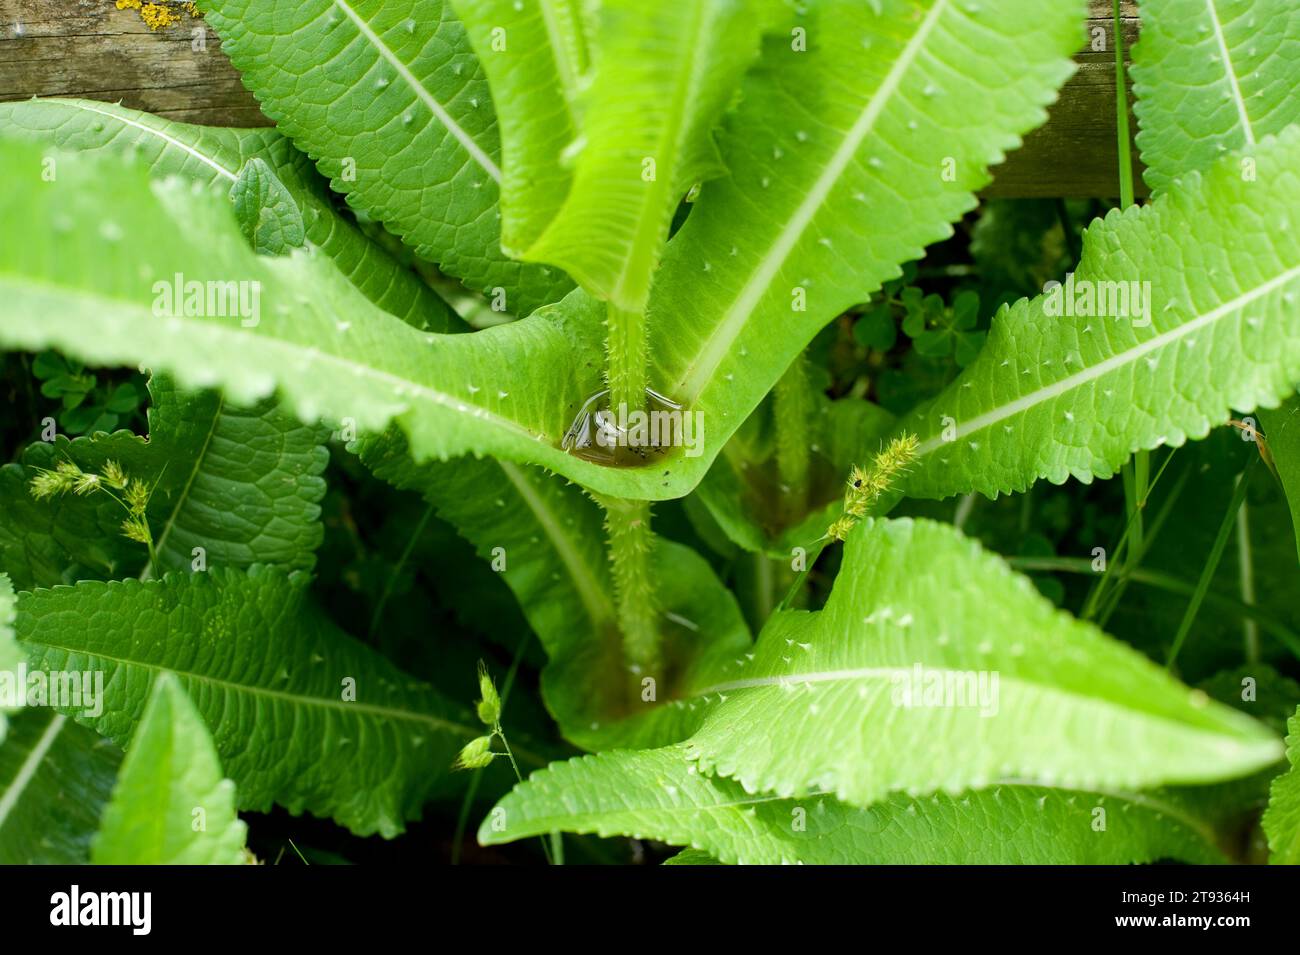 La Teasel selvatica (Dipsacus fullonum o Dipsacum sylvestris) è una pianta biennale originaria dell'Eurasia e del Nord Africa. Acqua piovana raccolta da foglie di materiale sissile Foto Stock